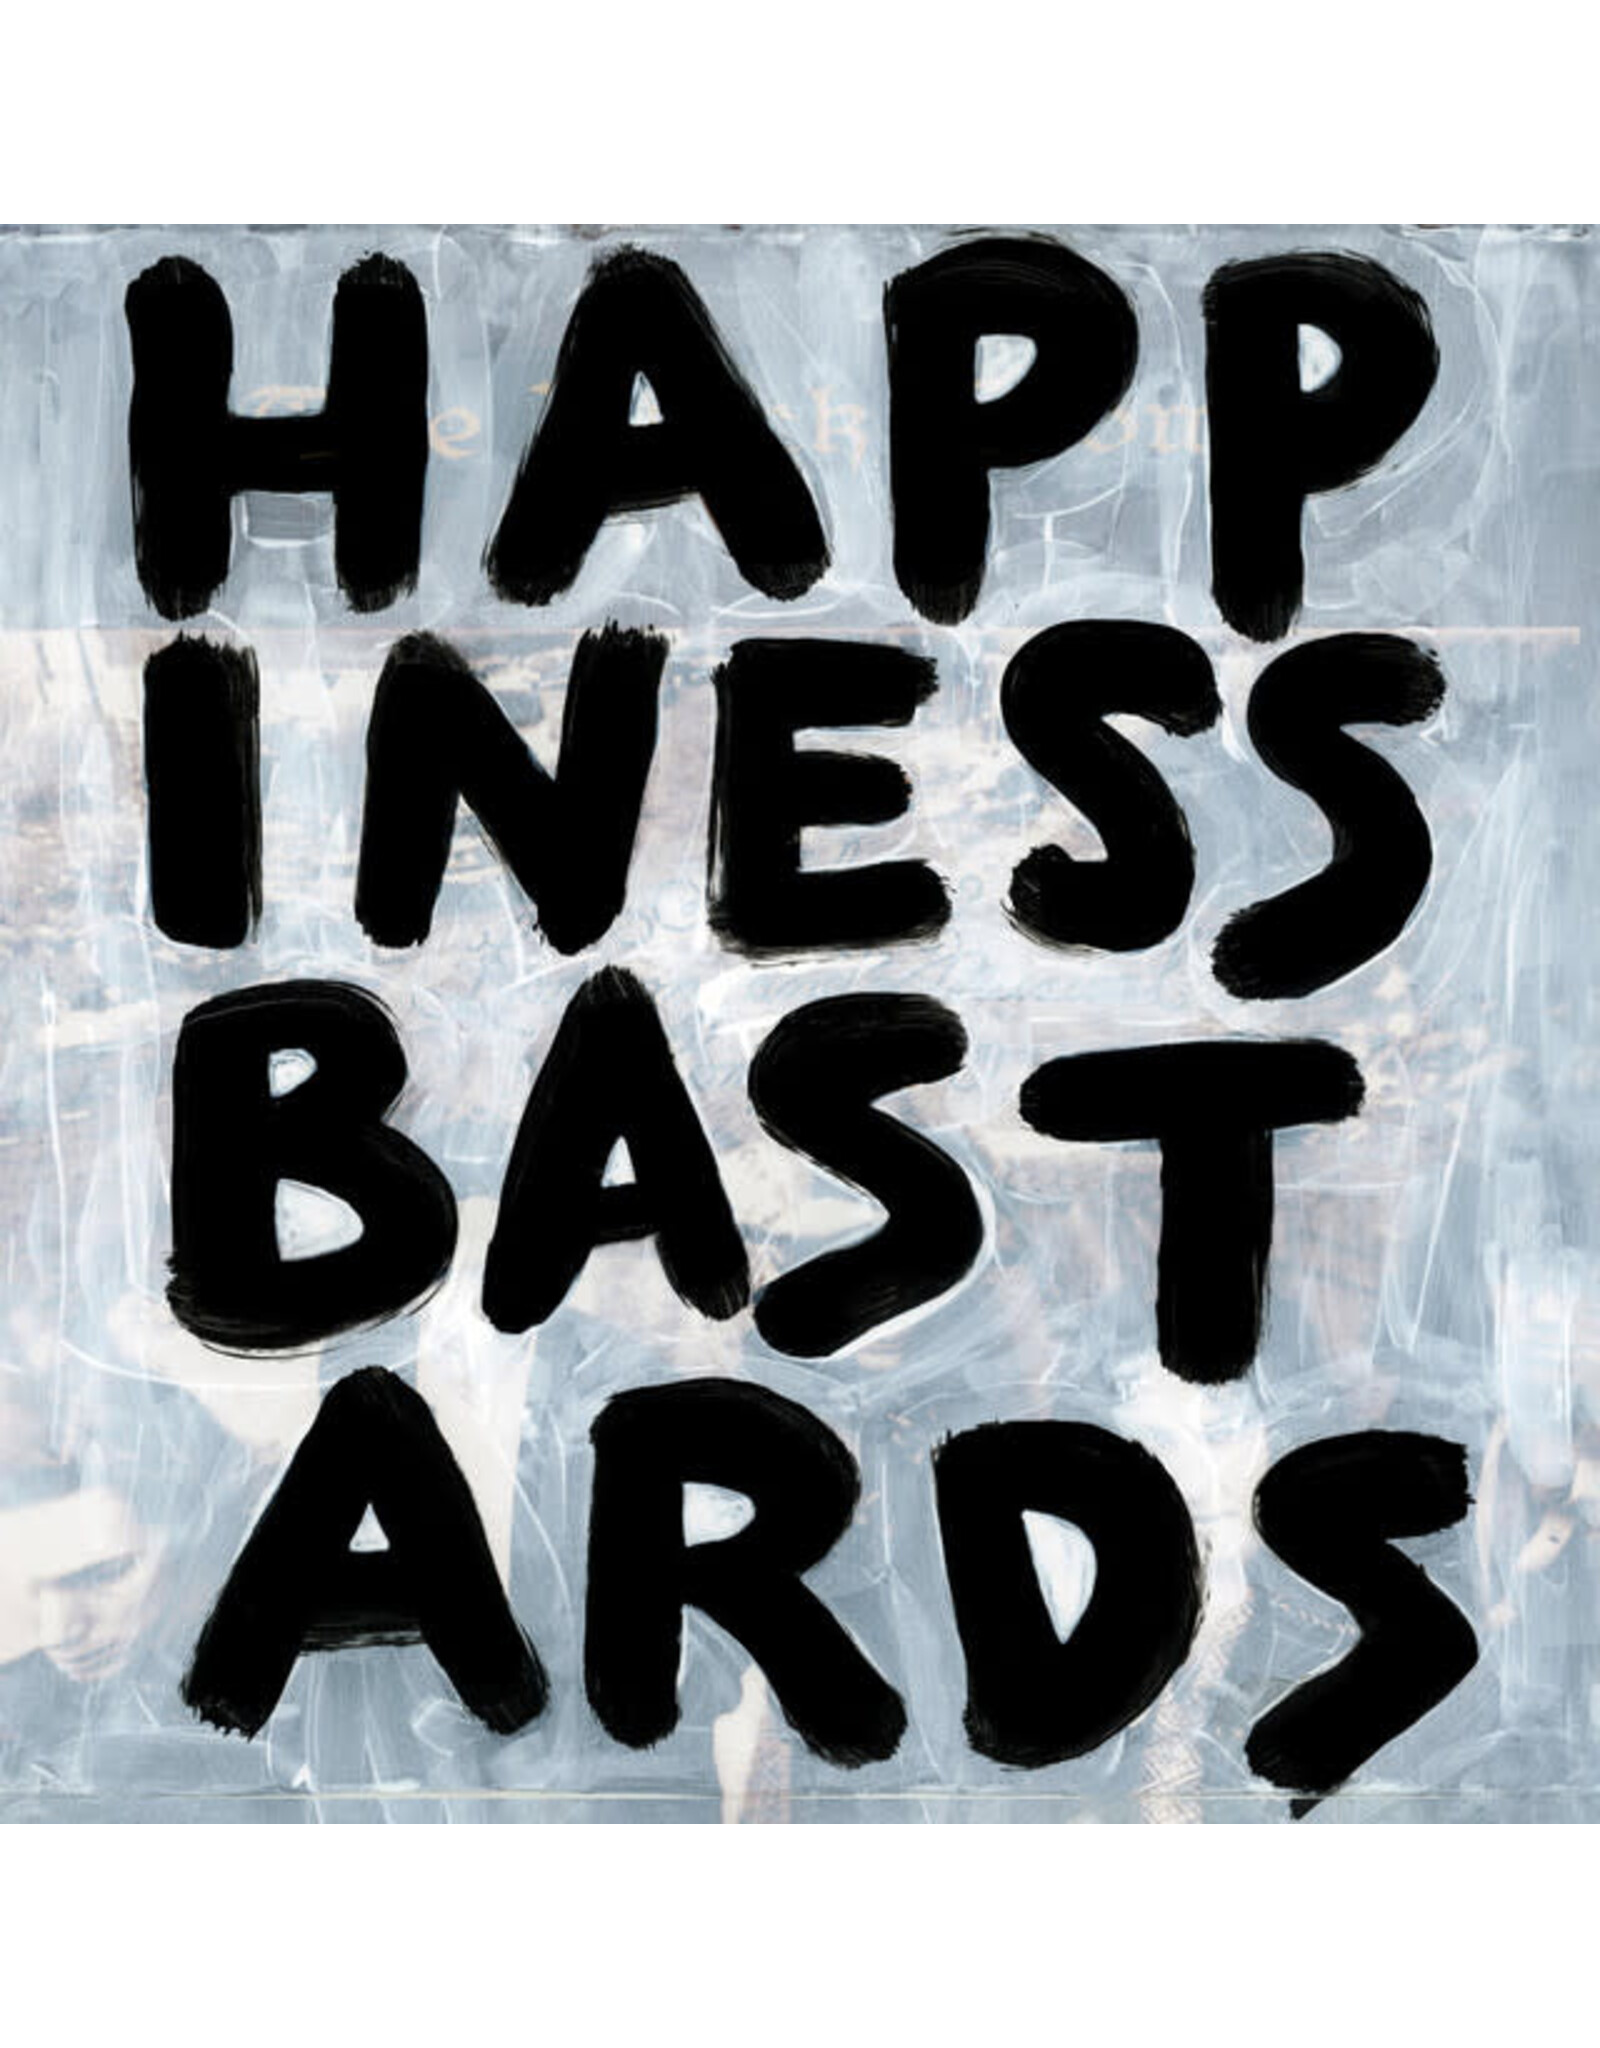 Black Crowes: Happiness Bastards LP